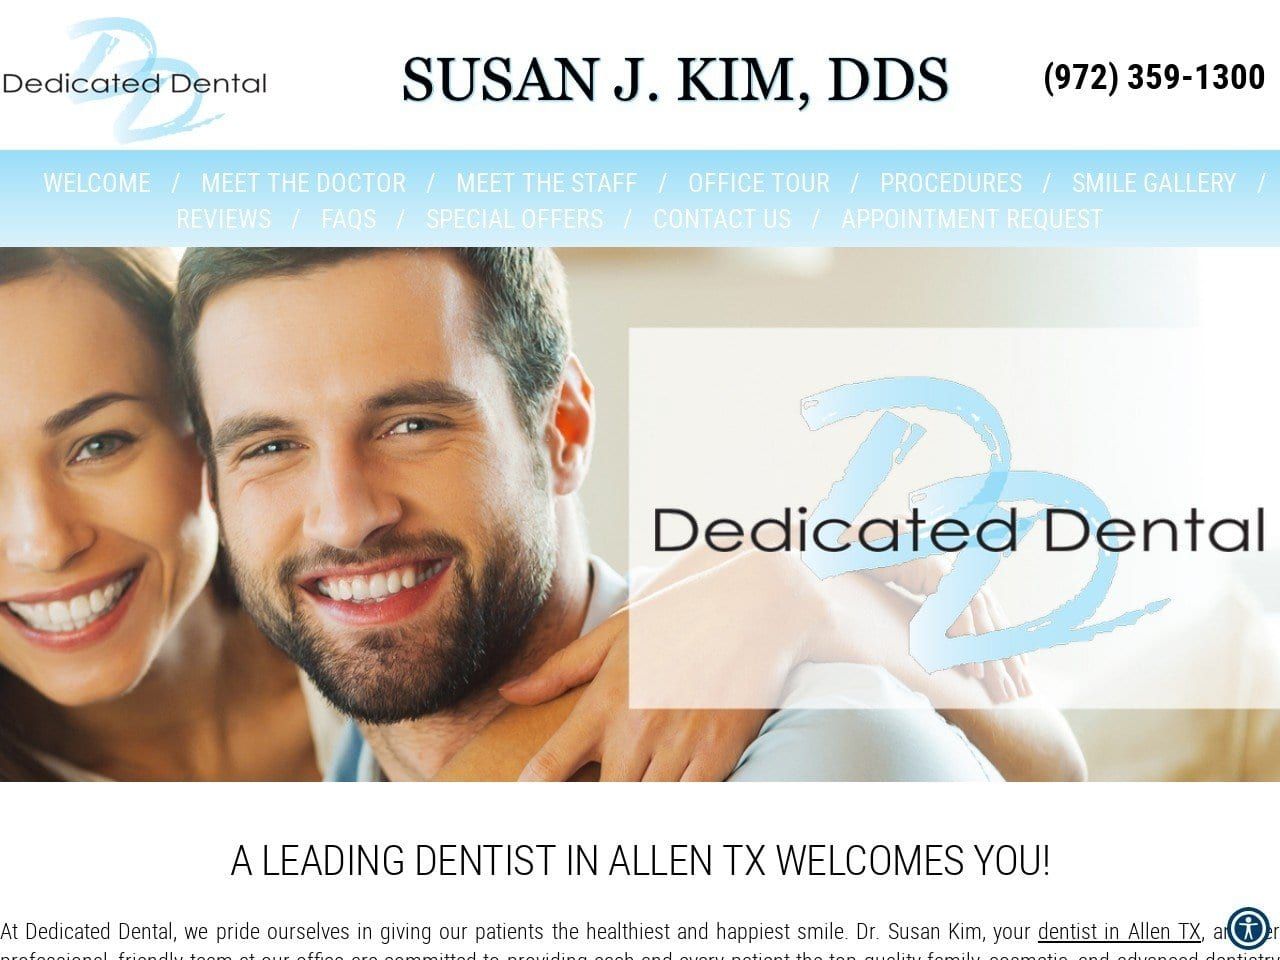 Dedicated Dental PA Website Screenshot from allendedicateddentist.com